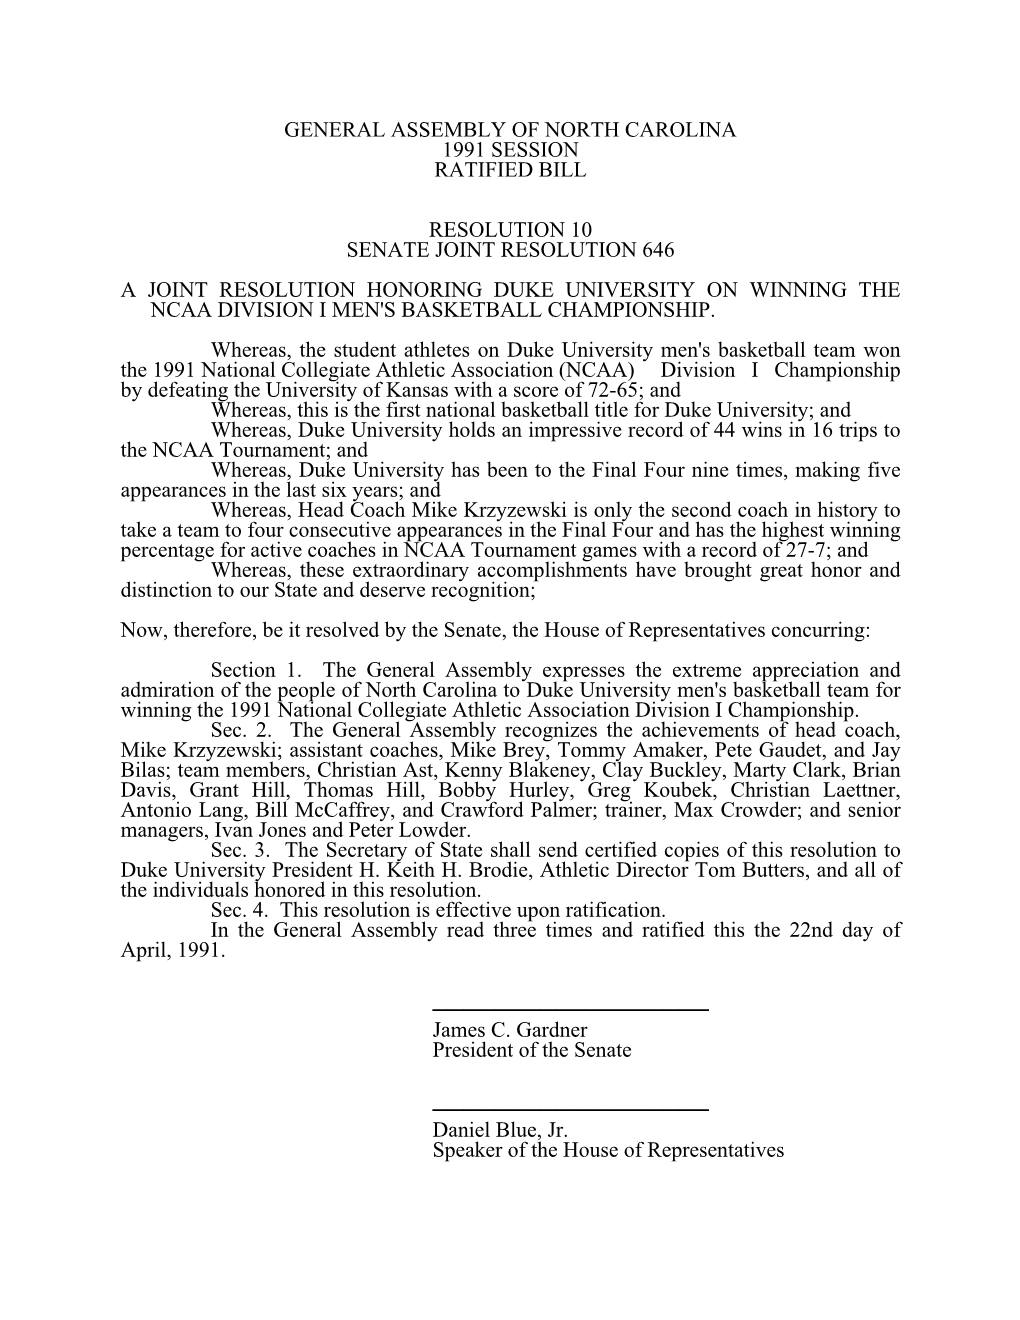 Senate Joint Resolution 646